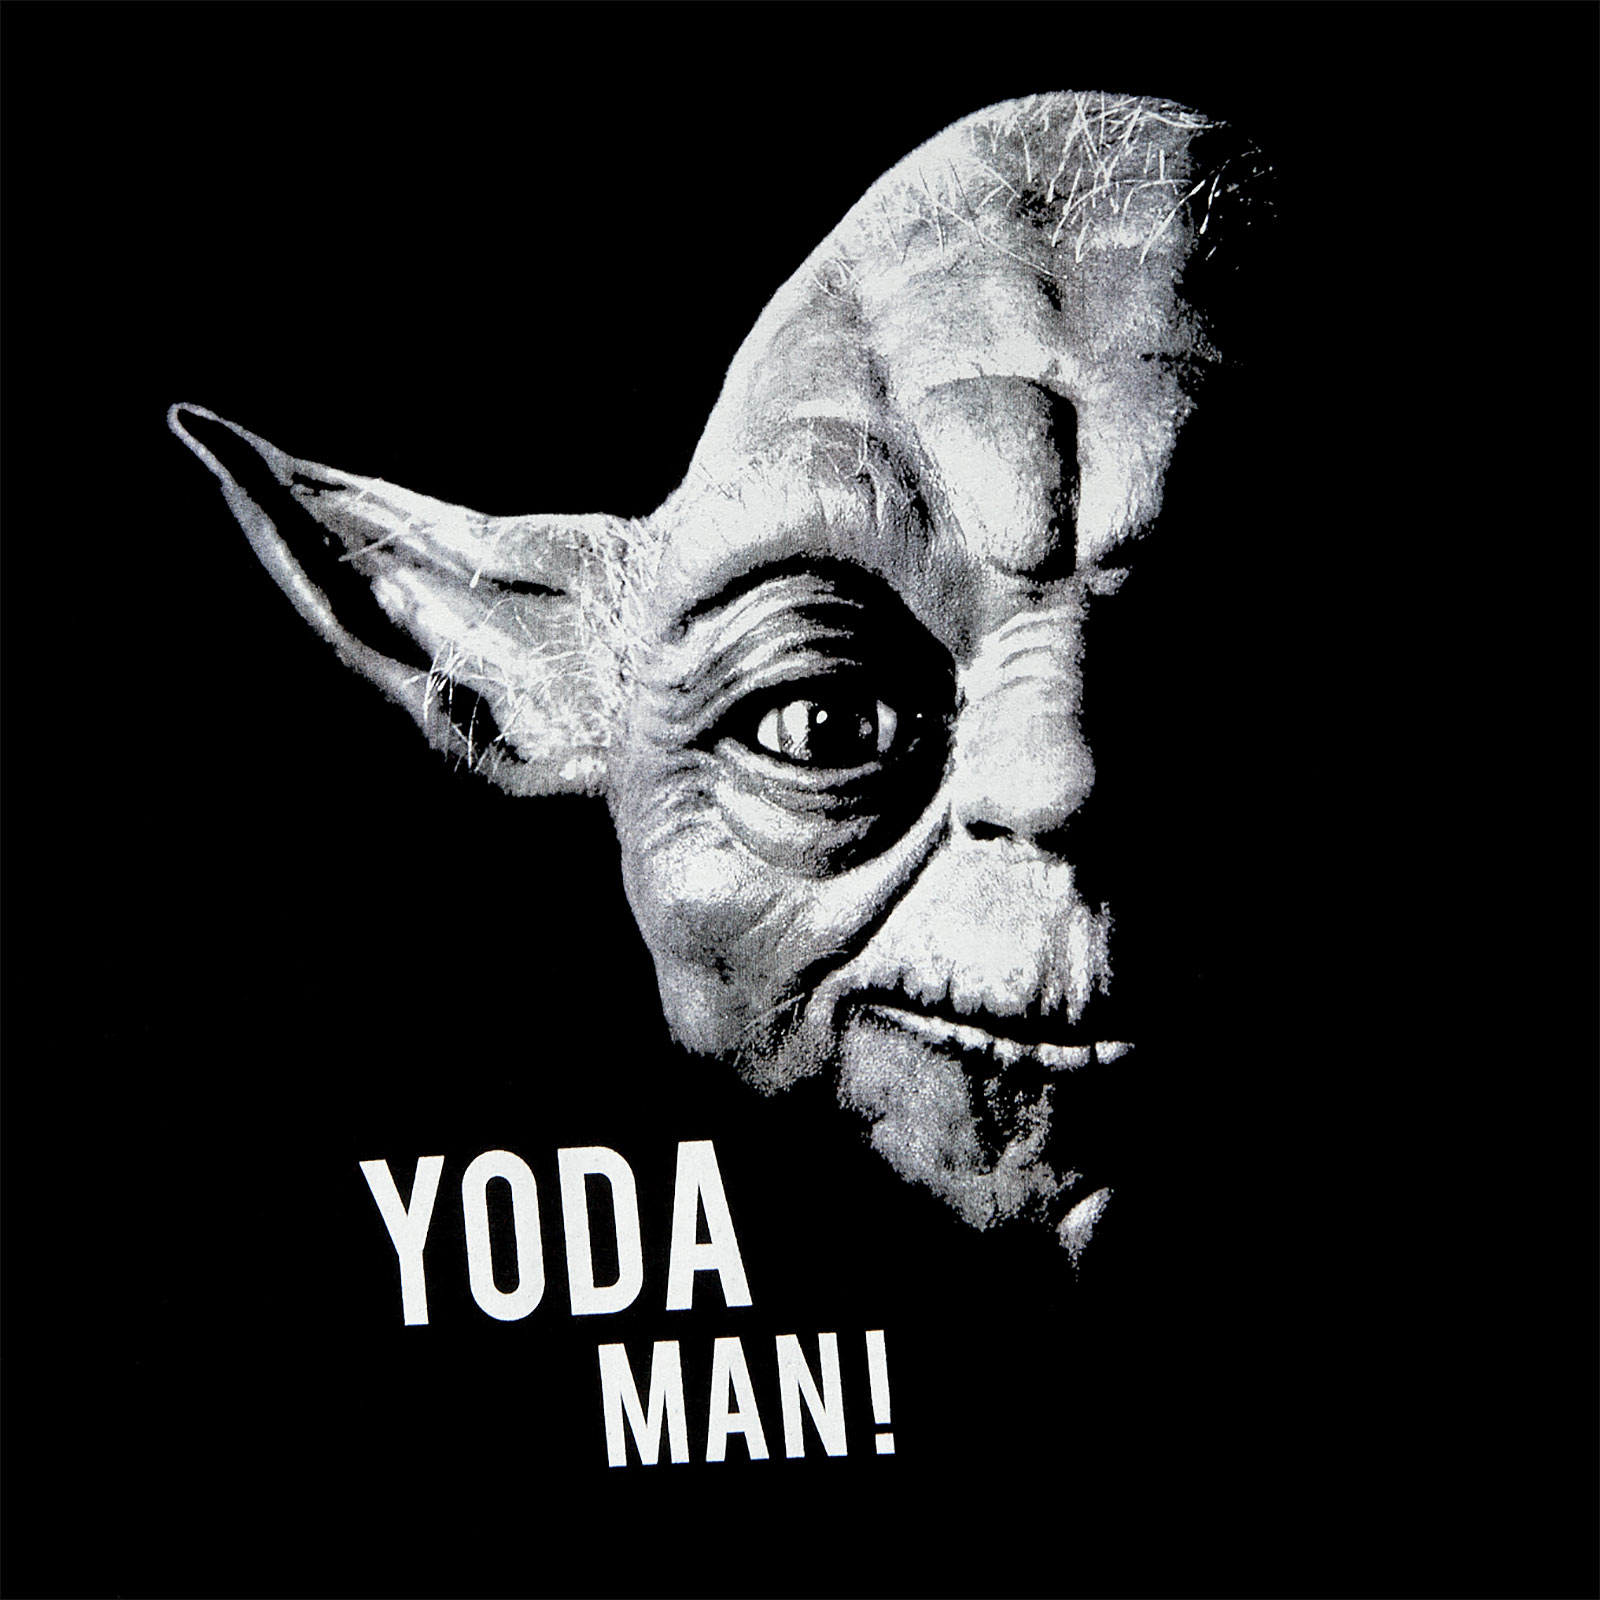 Star Wars - Yoda Man! T-Shirt Black